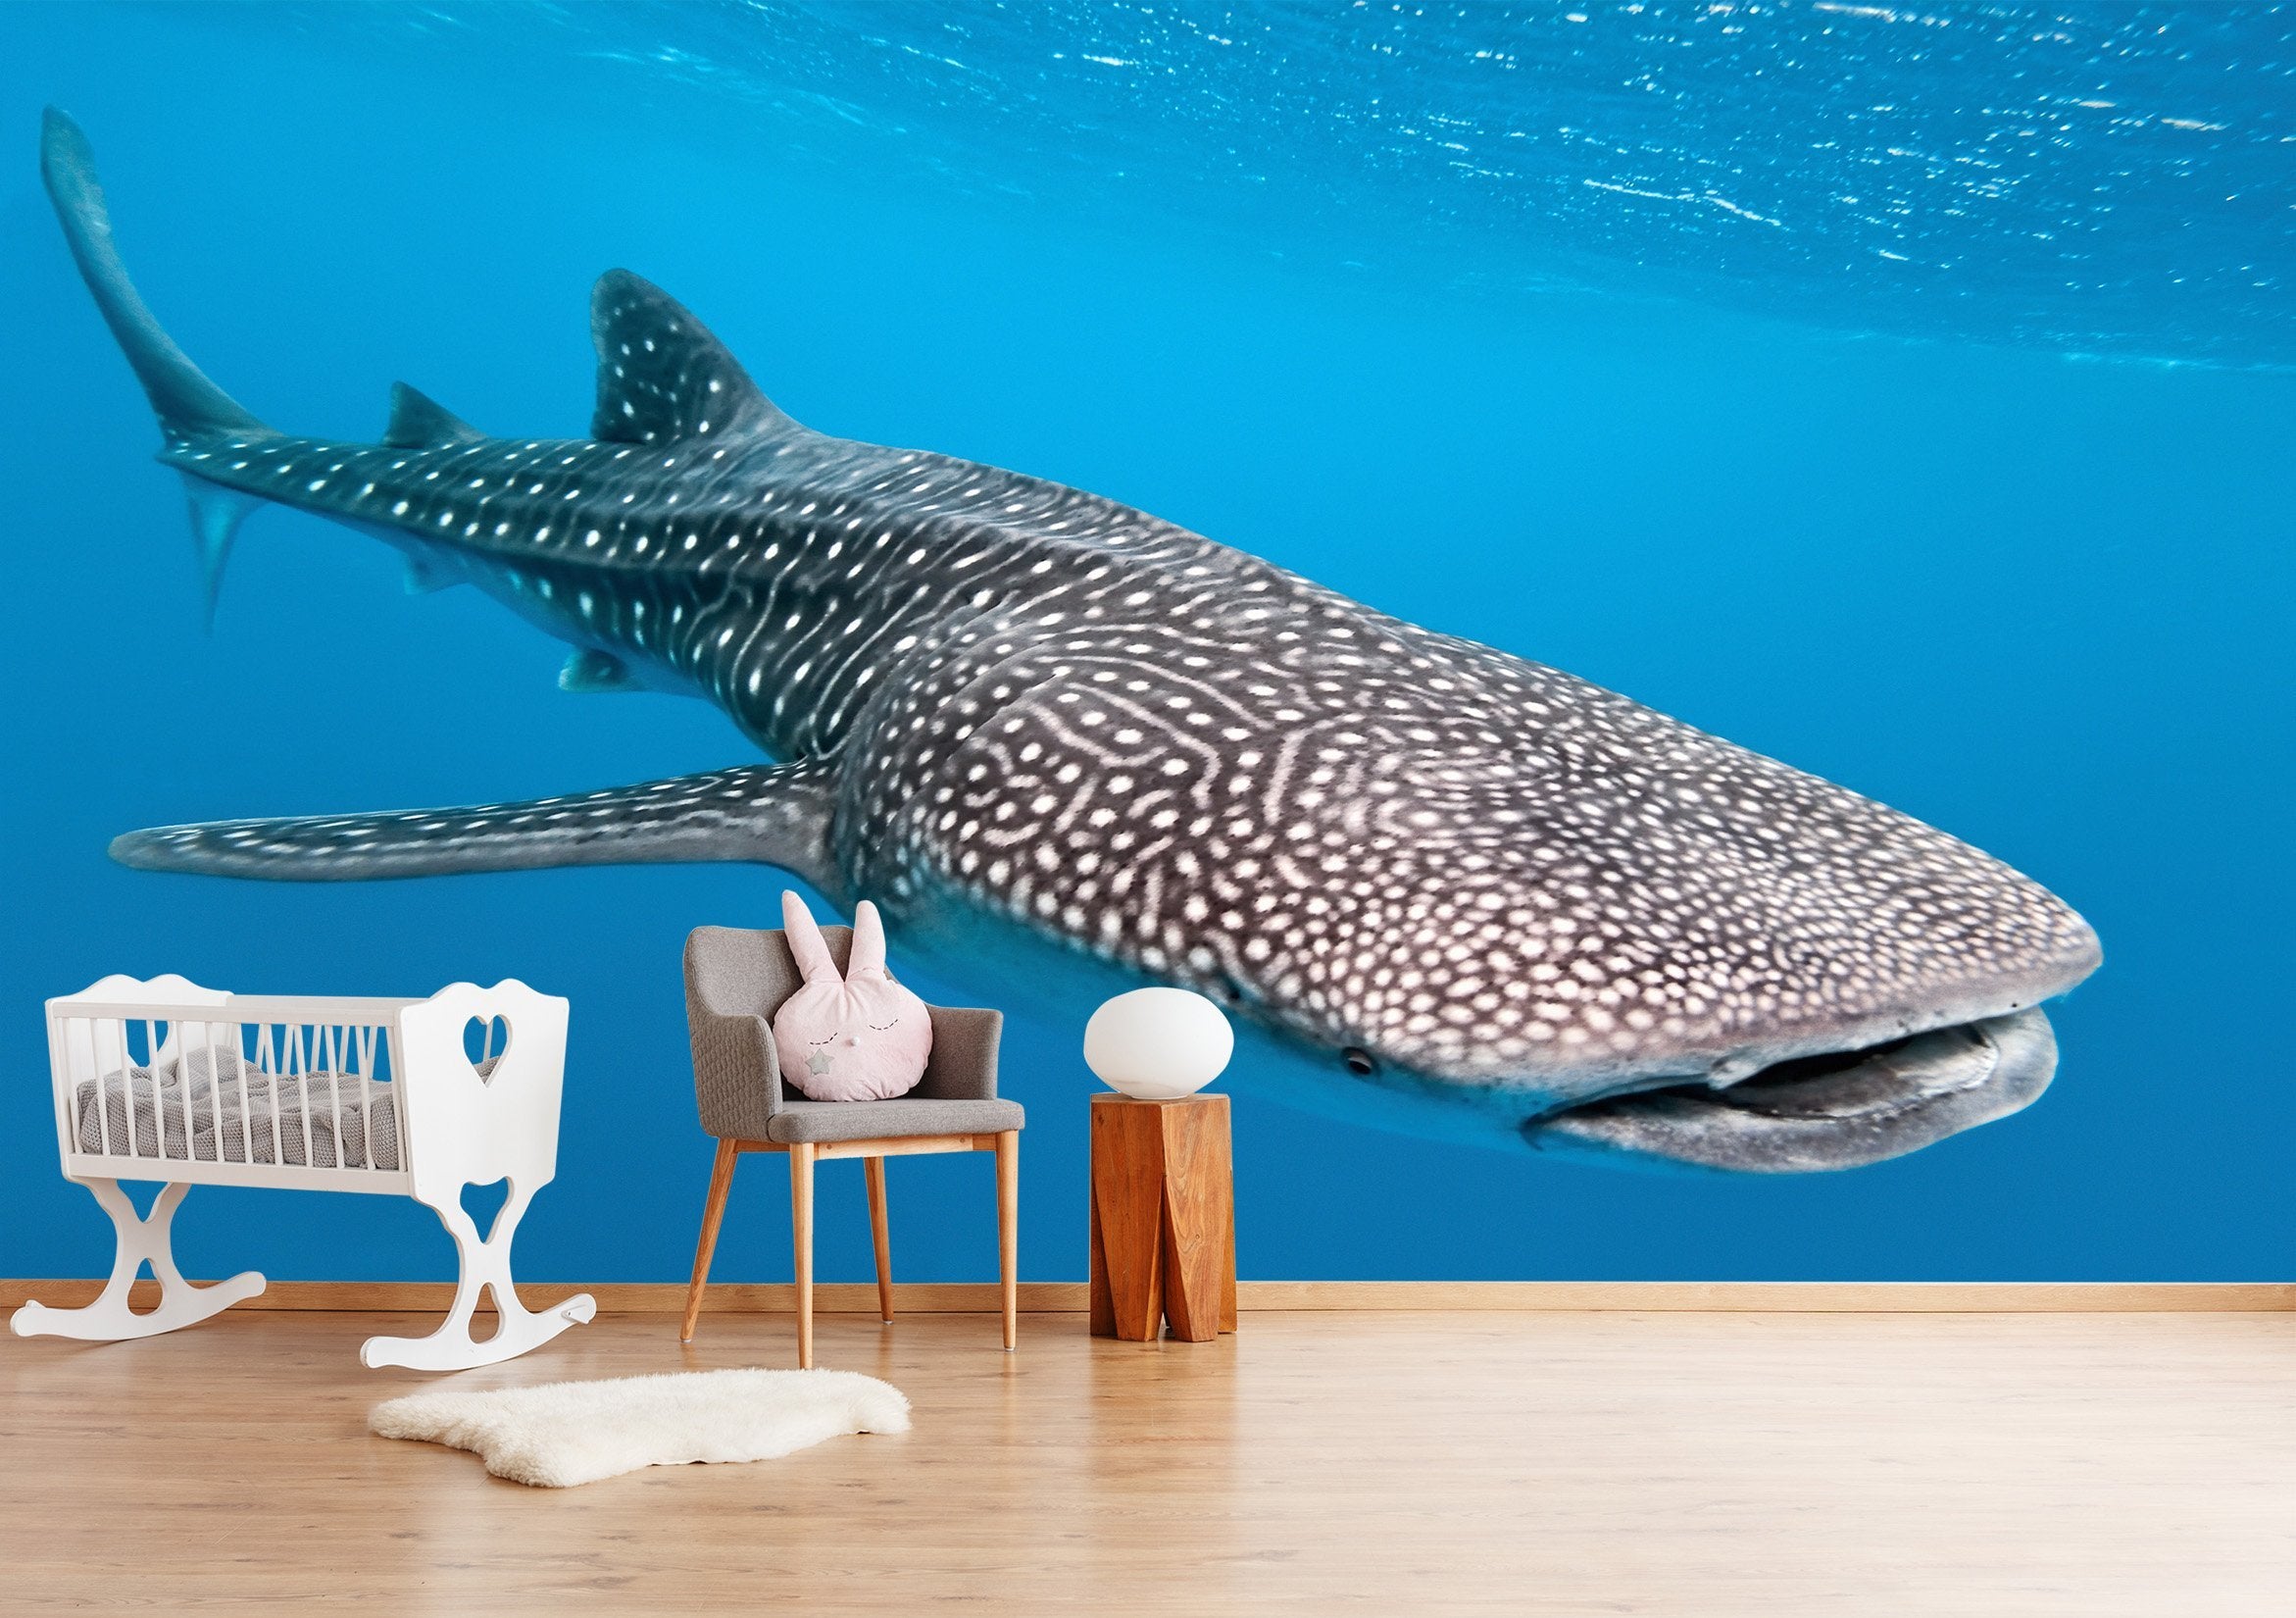 3D Big Fish Swimming 043 Wallpaper AJ Wallpaper 